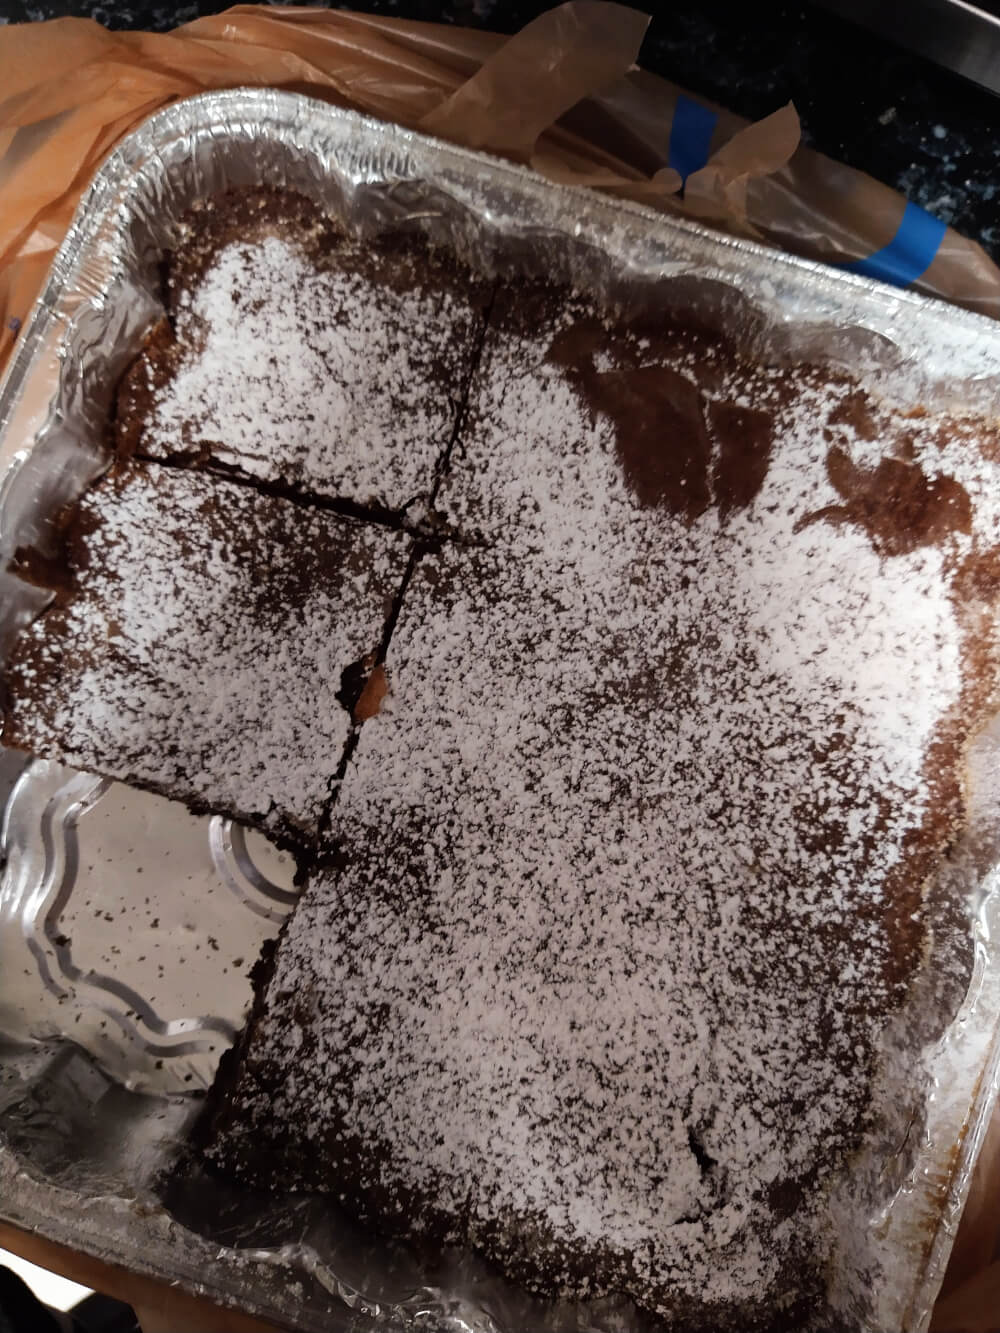 Pan of brownies with powdered sugar